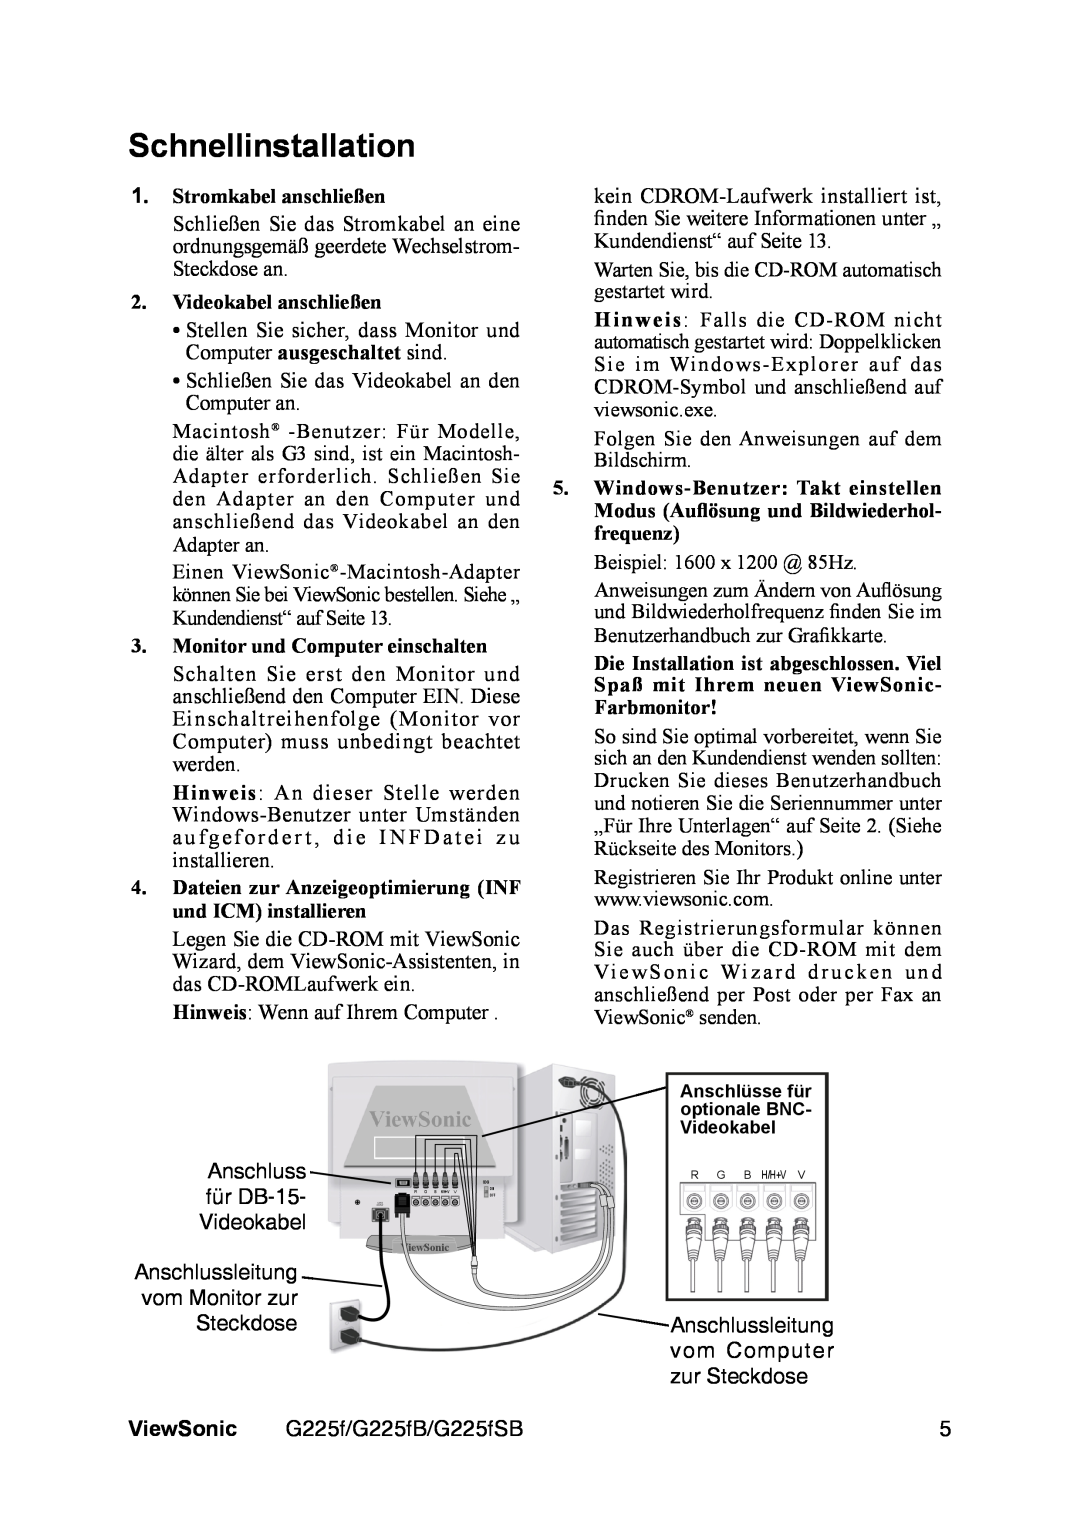 ViewSonic VS111135 manual Schnellinstallation, ViewSonic 